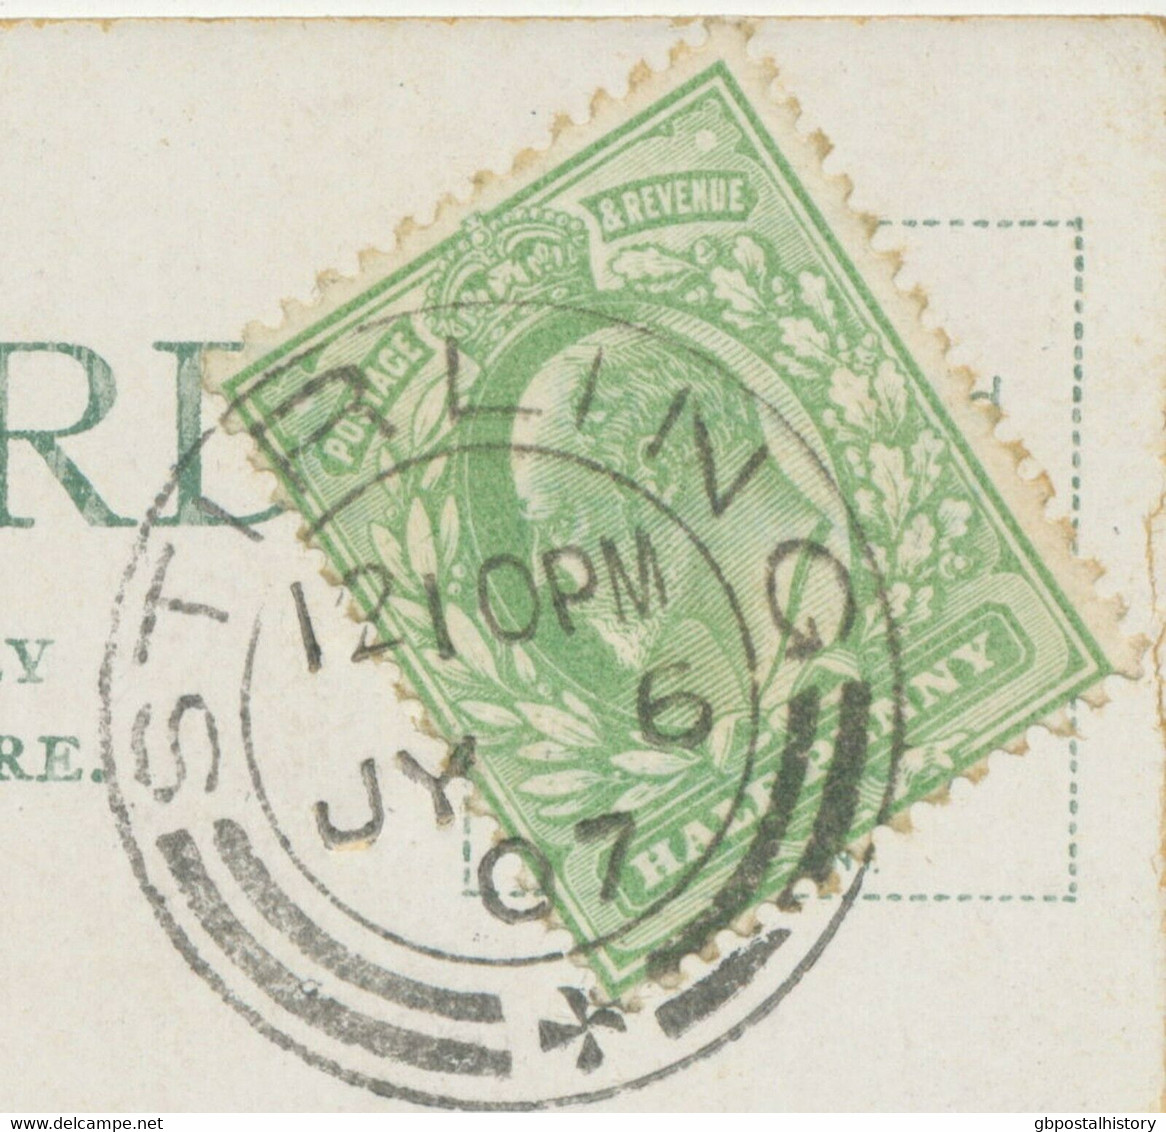 GB SCOTTISH VILLAGE POSTMARKS „STIRLING“ Superb Strike (24mm, UNCOMMON Time Code „1210PM“) On Very Fine Postcard 1907 - Escocia